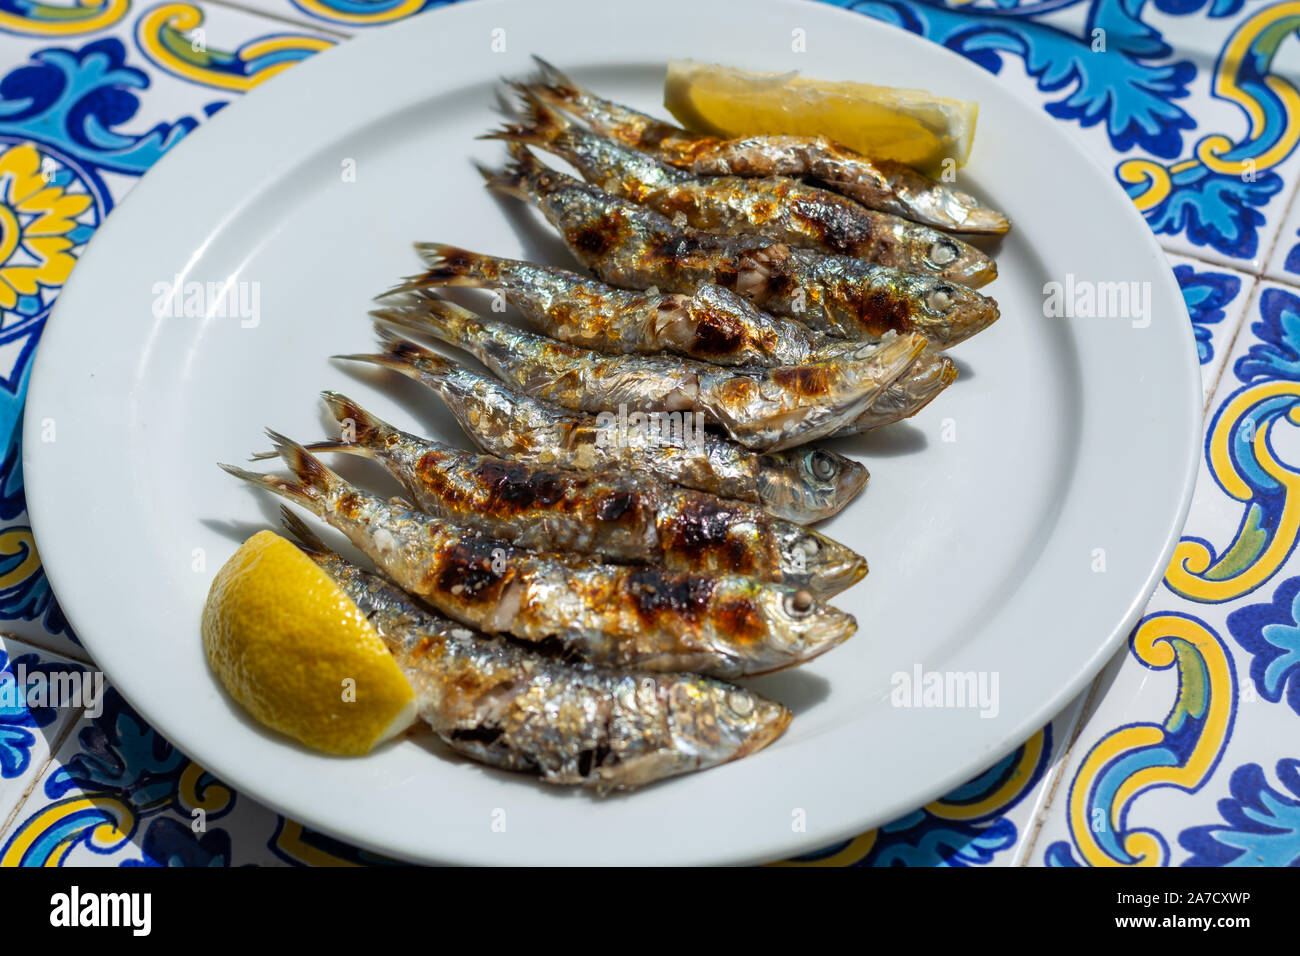 ▷ Enjoying authentic sardines in Malaga - El Espeto